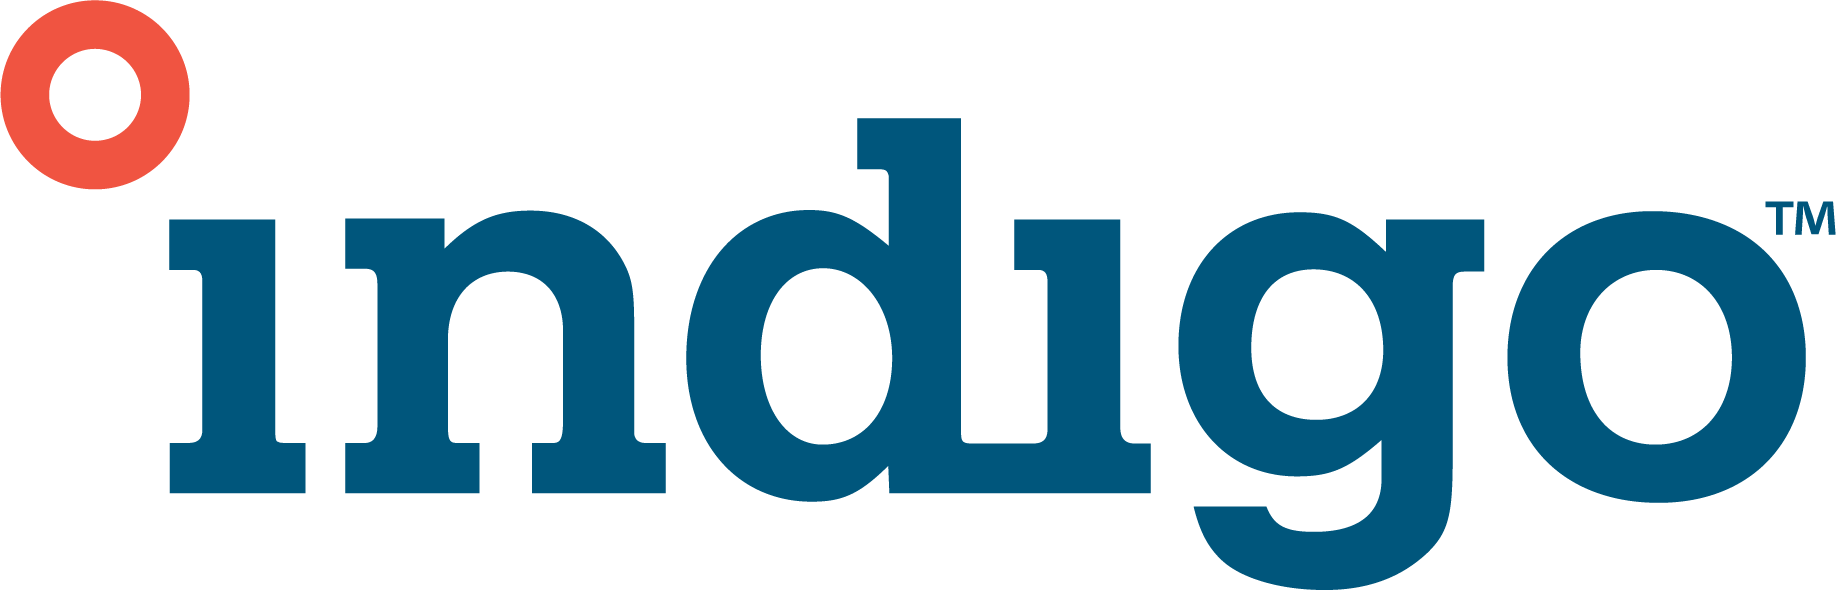 Indigo Agriculture logo